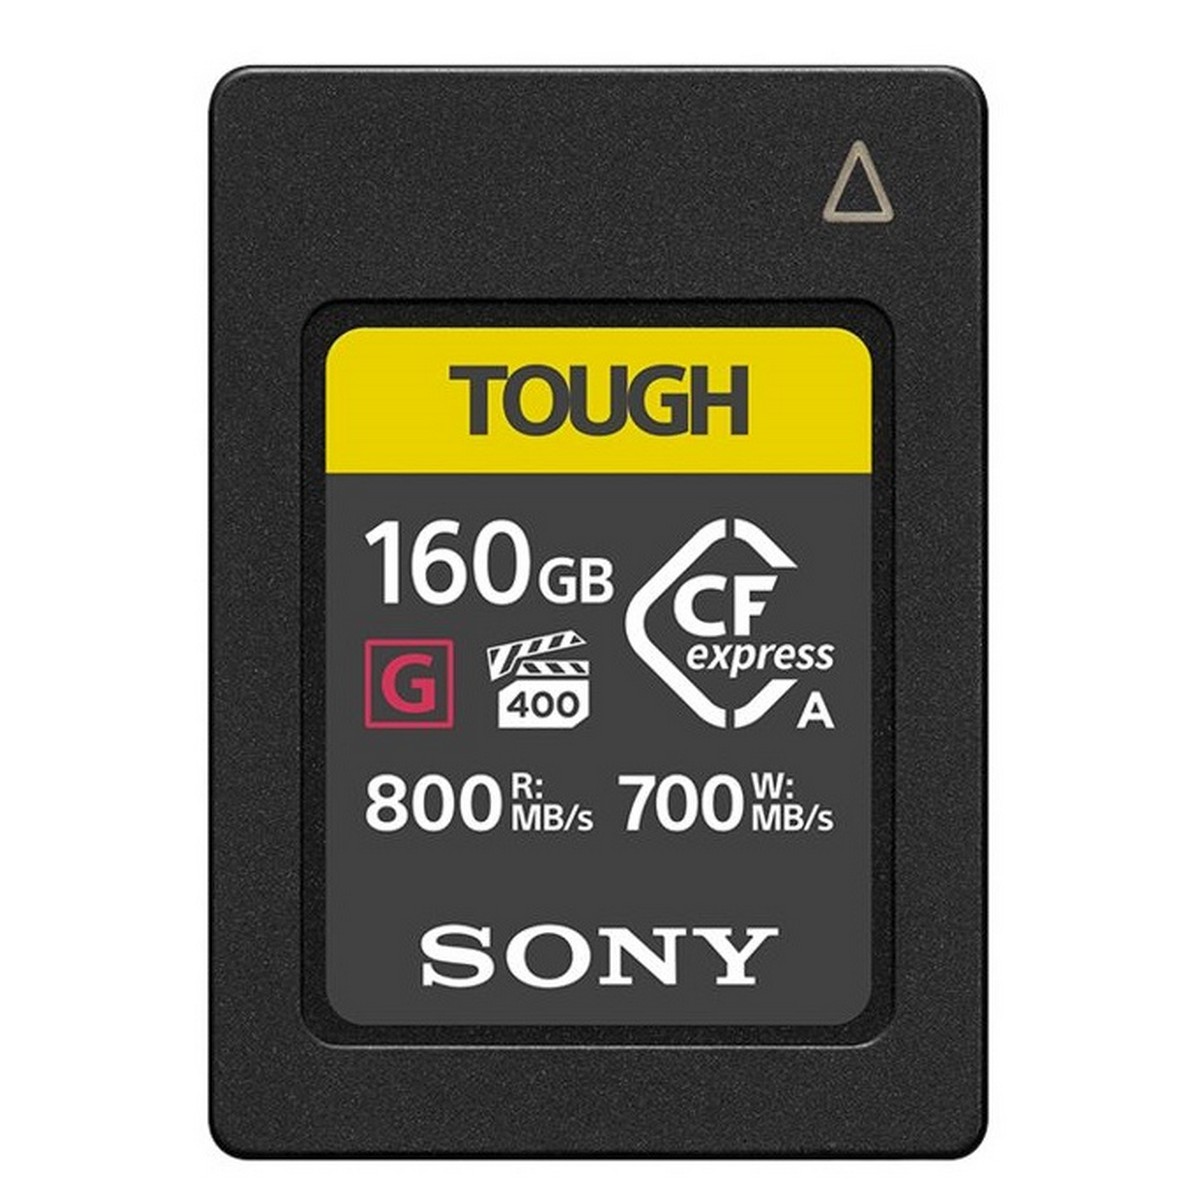 Карта памяти Sony CFexpress Type A 160GB Tough